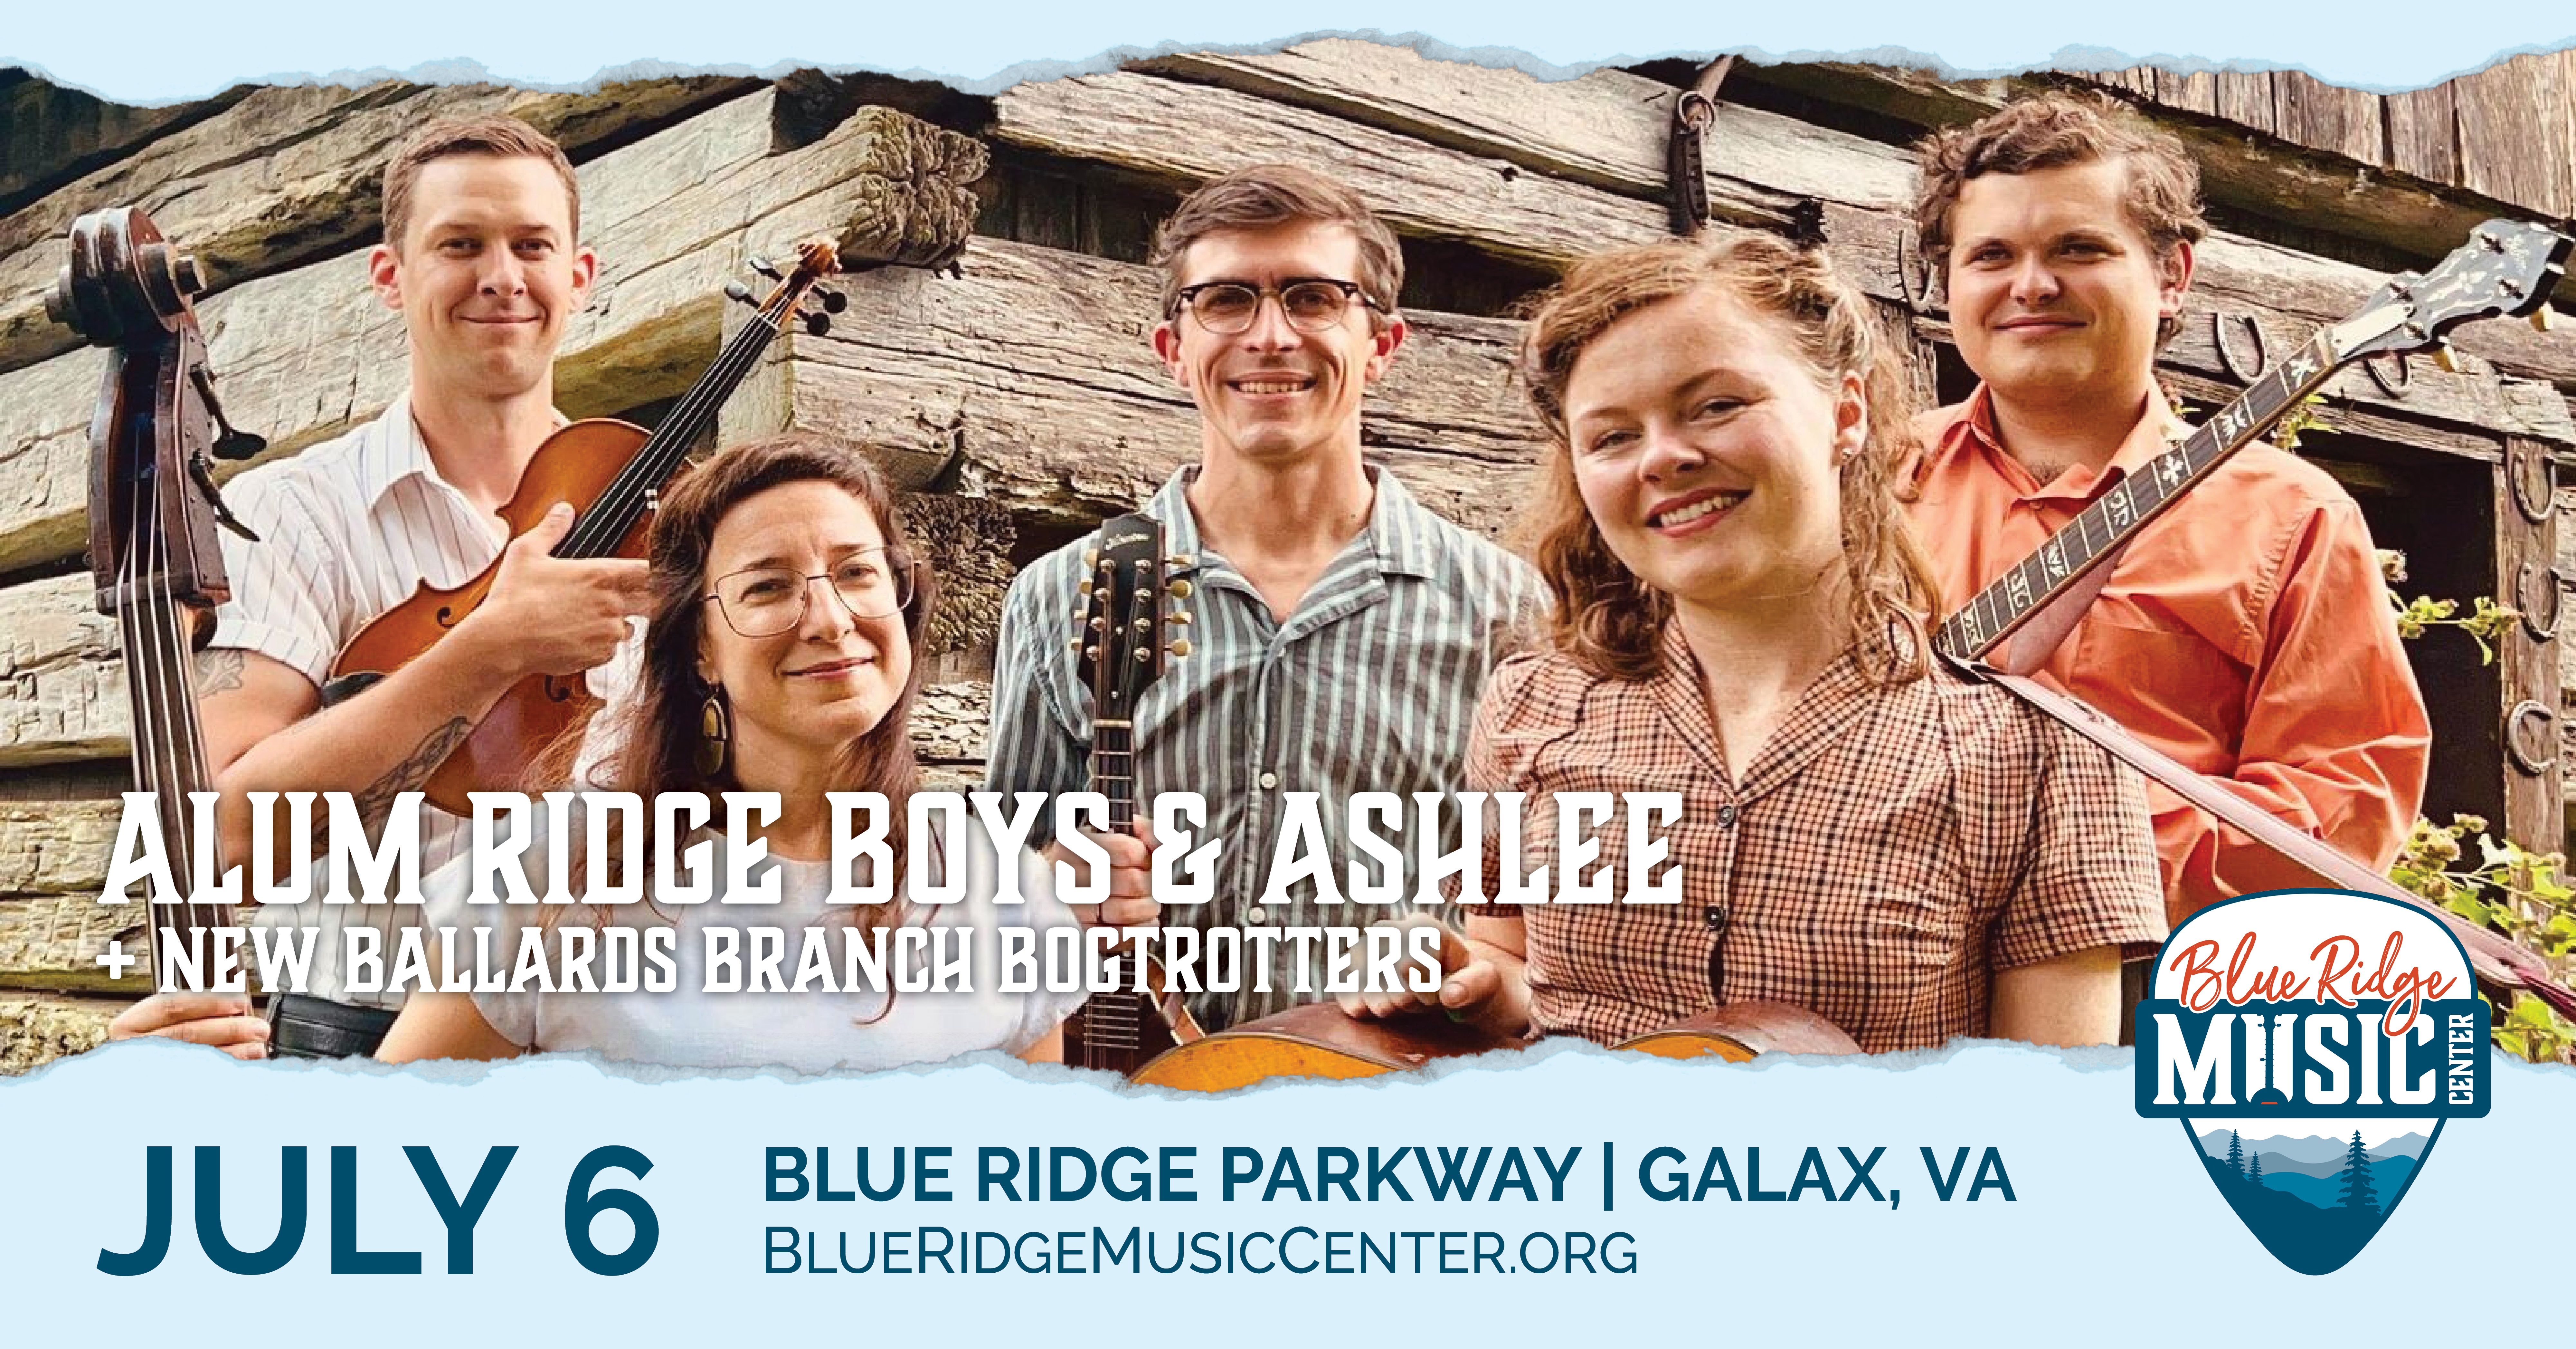 The Alum Ridge Boys & Ashlee performing with New Ballards Branch Bogtroggers at the Blue Ridge Music Center